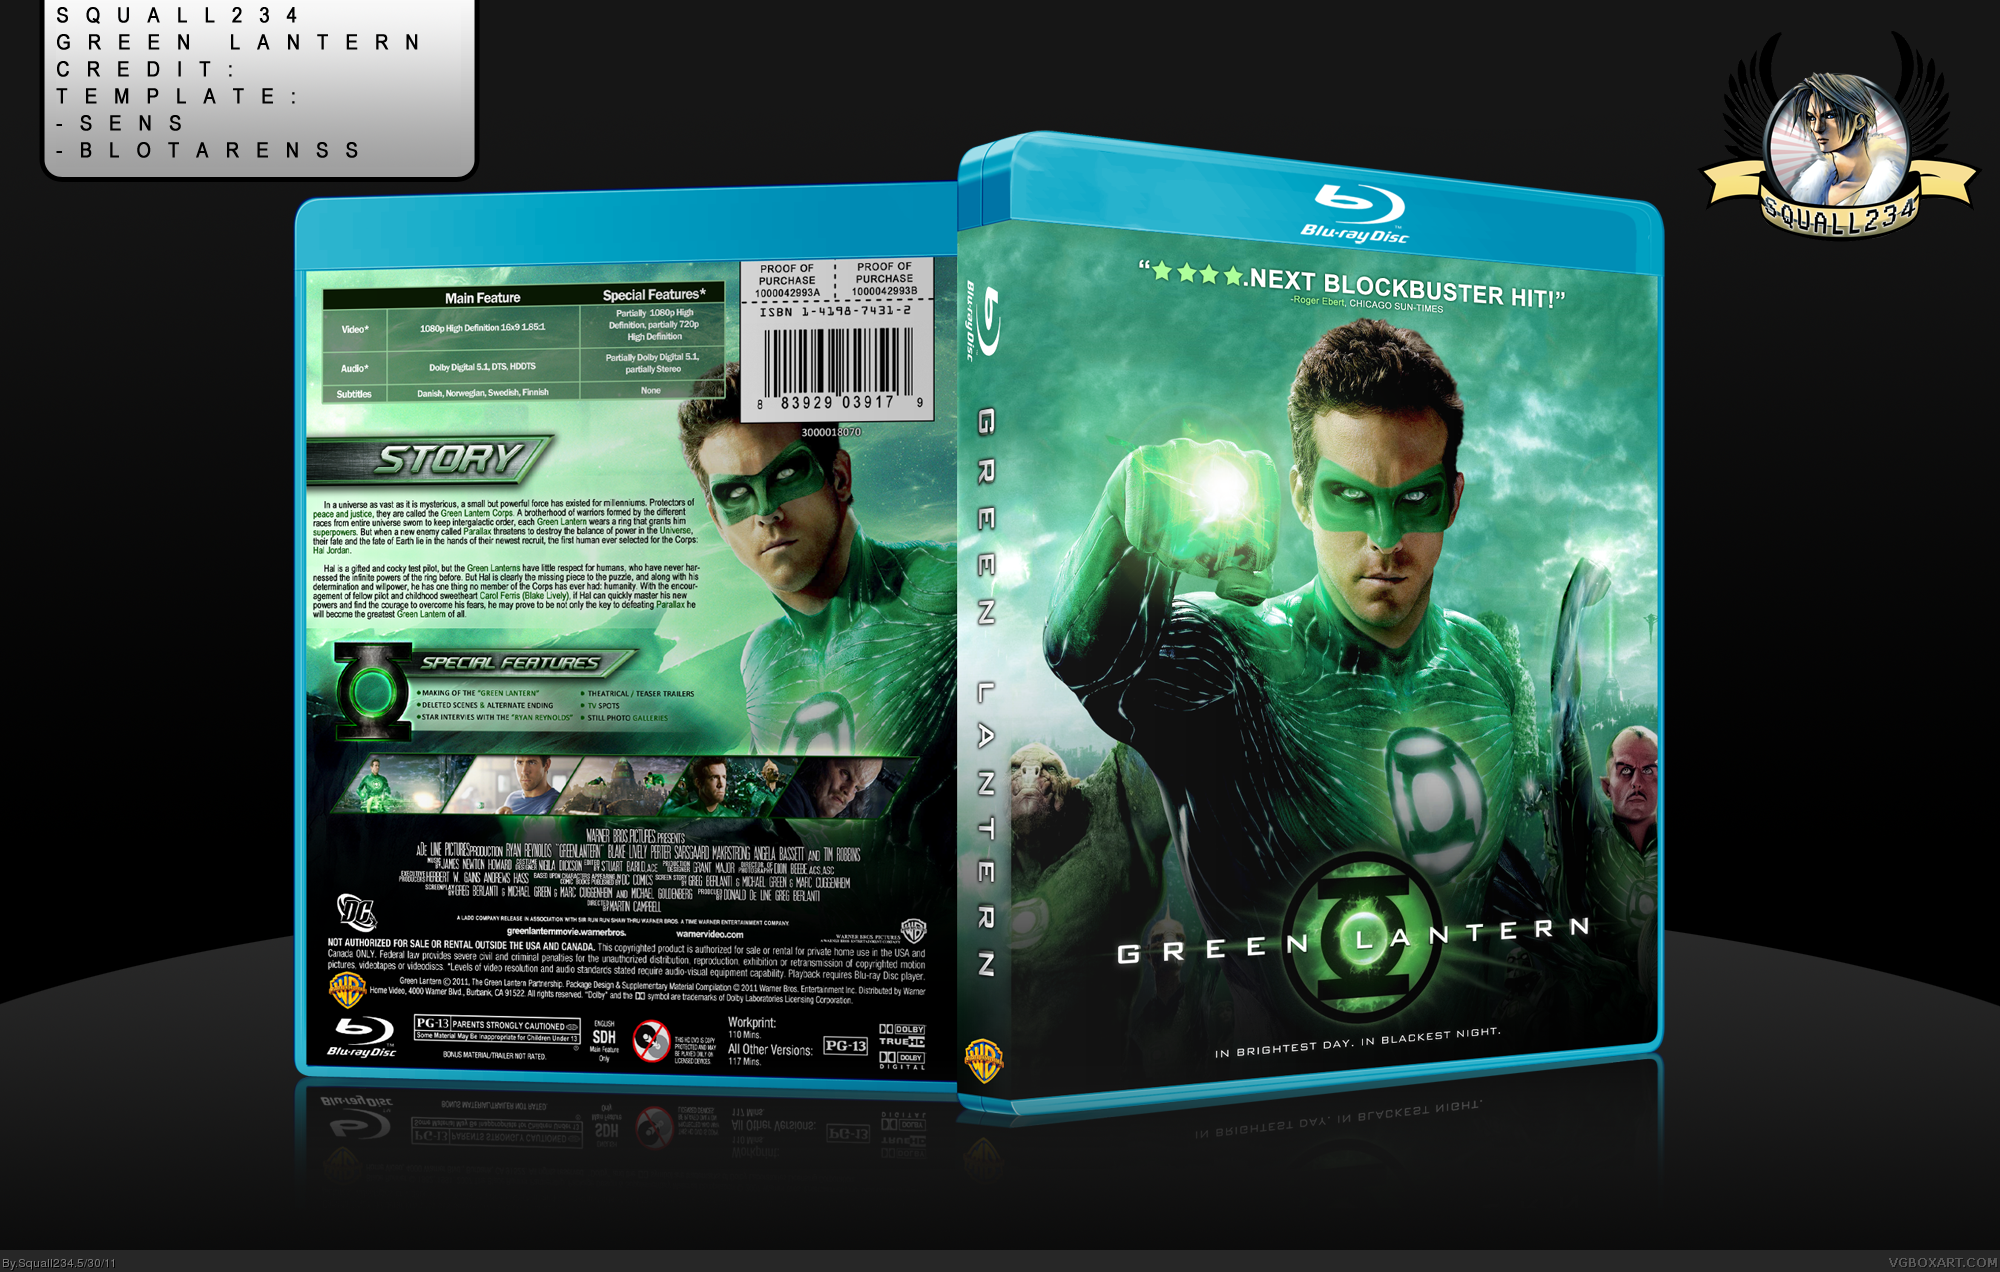 Green Lantern box cover